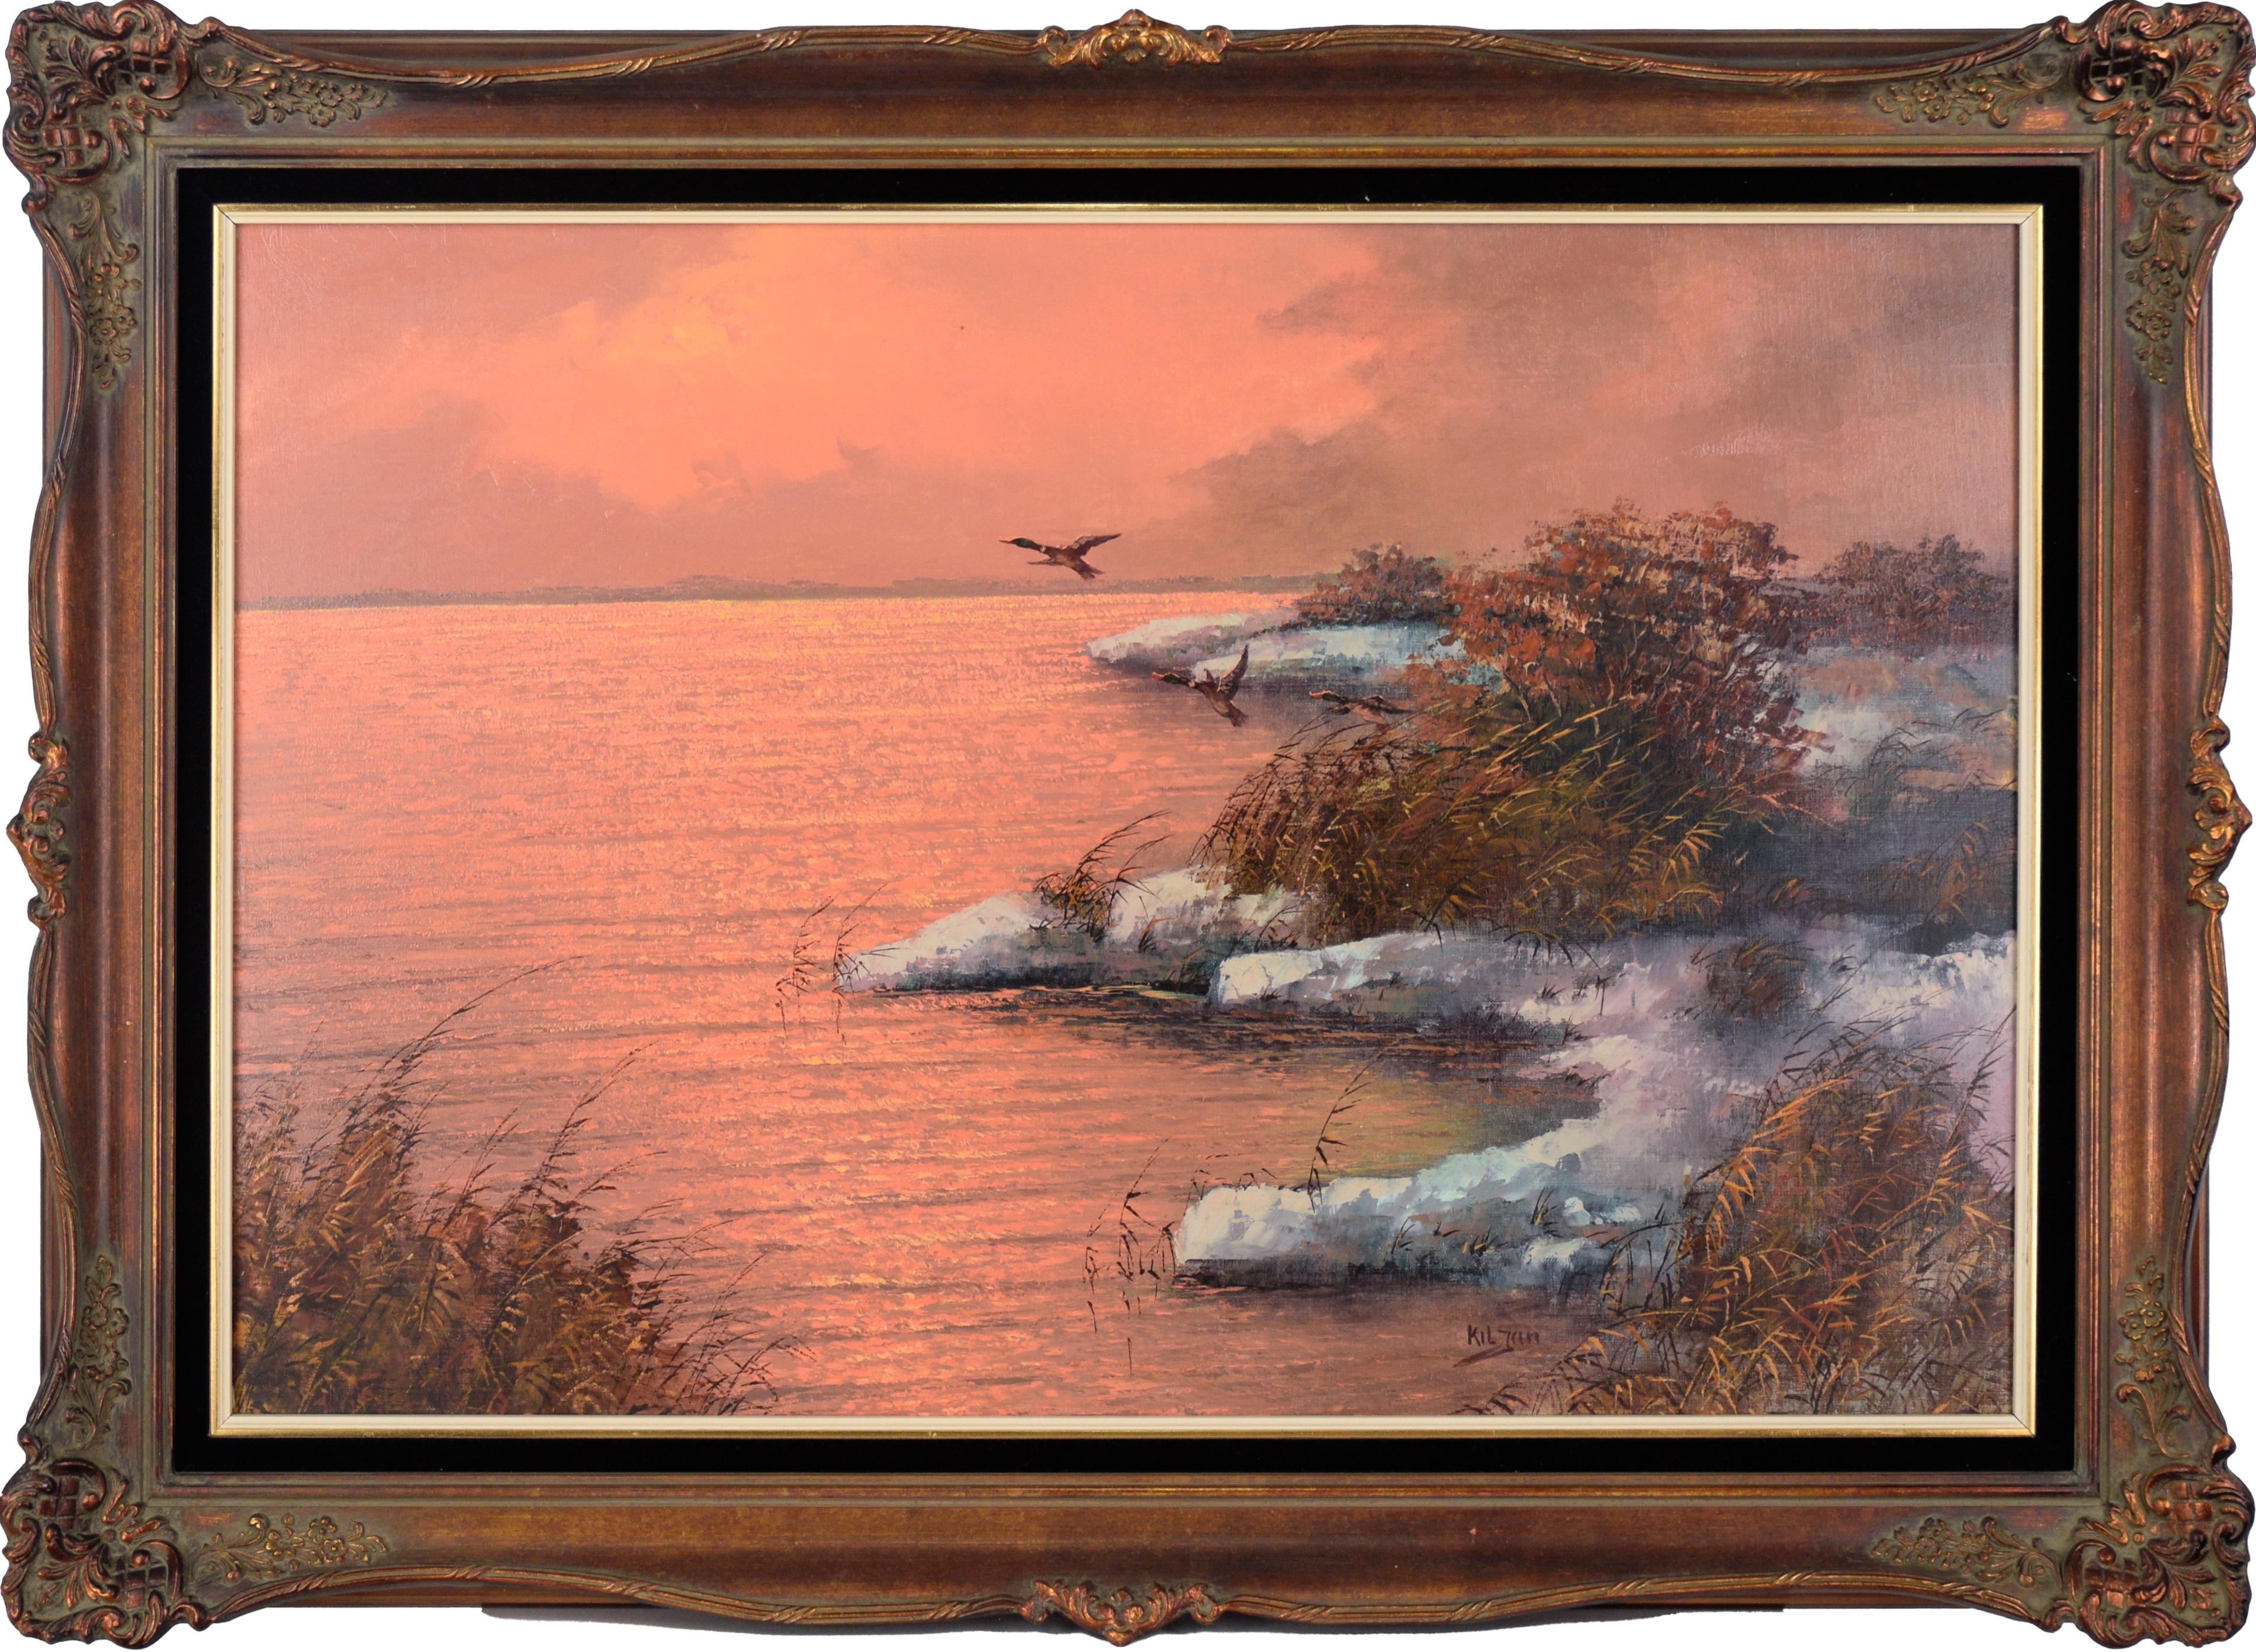 Kiljan Animal Painting - Ducks Flying Over the Lake at Sunset